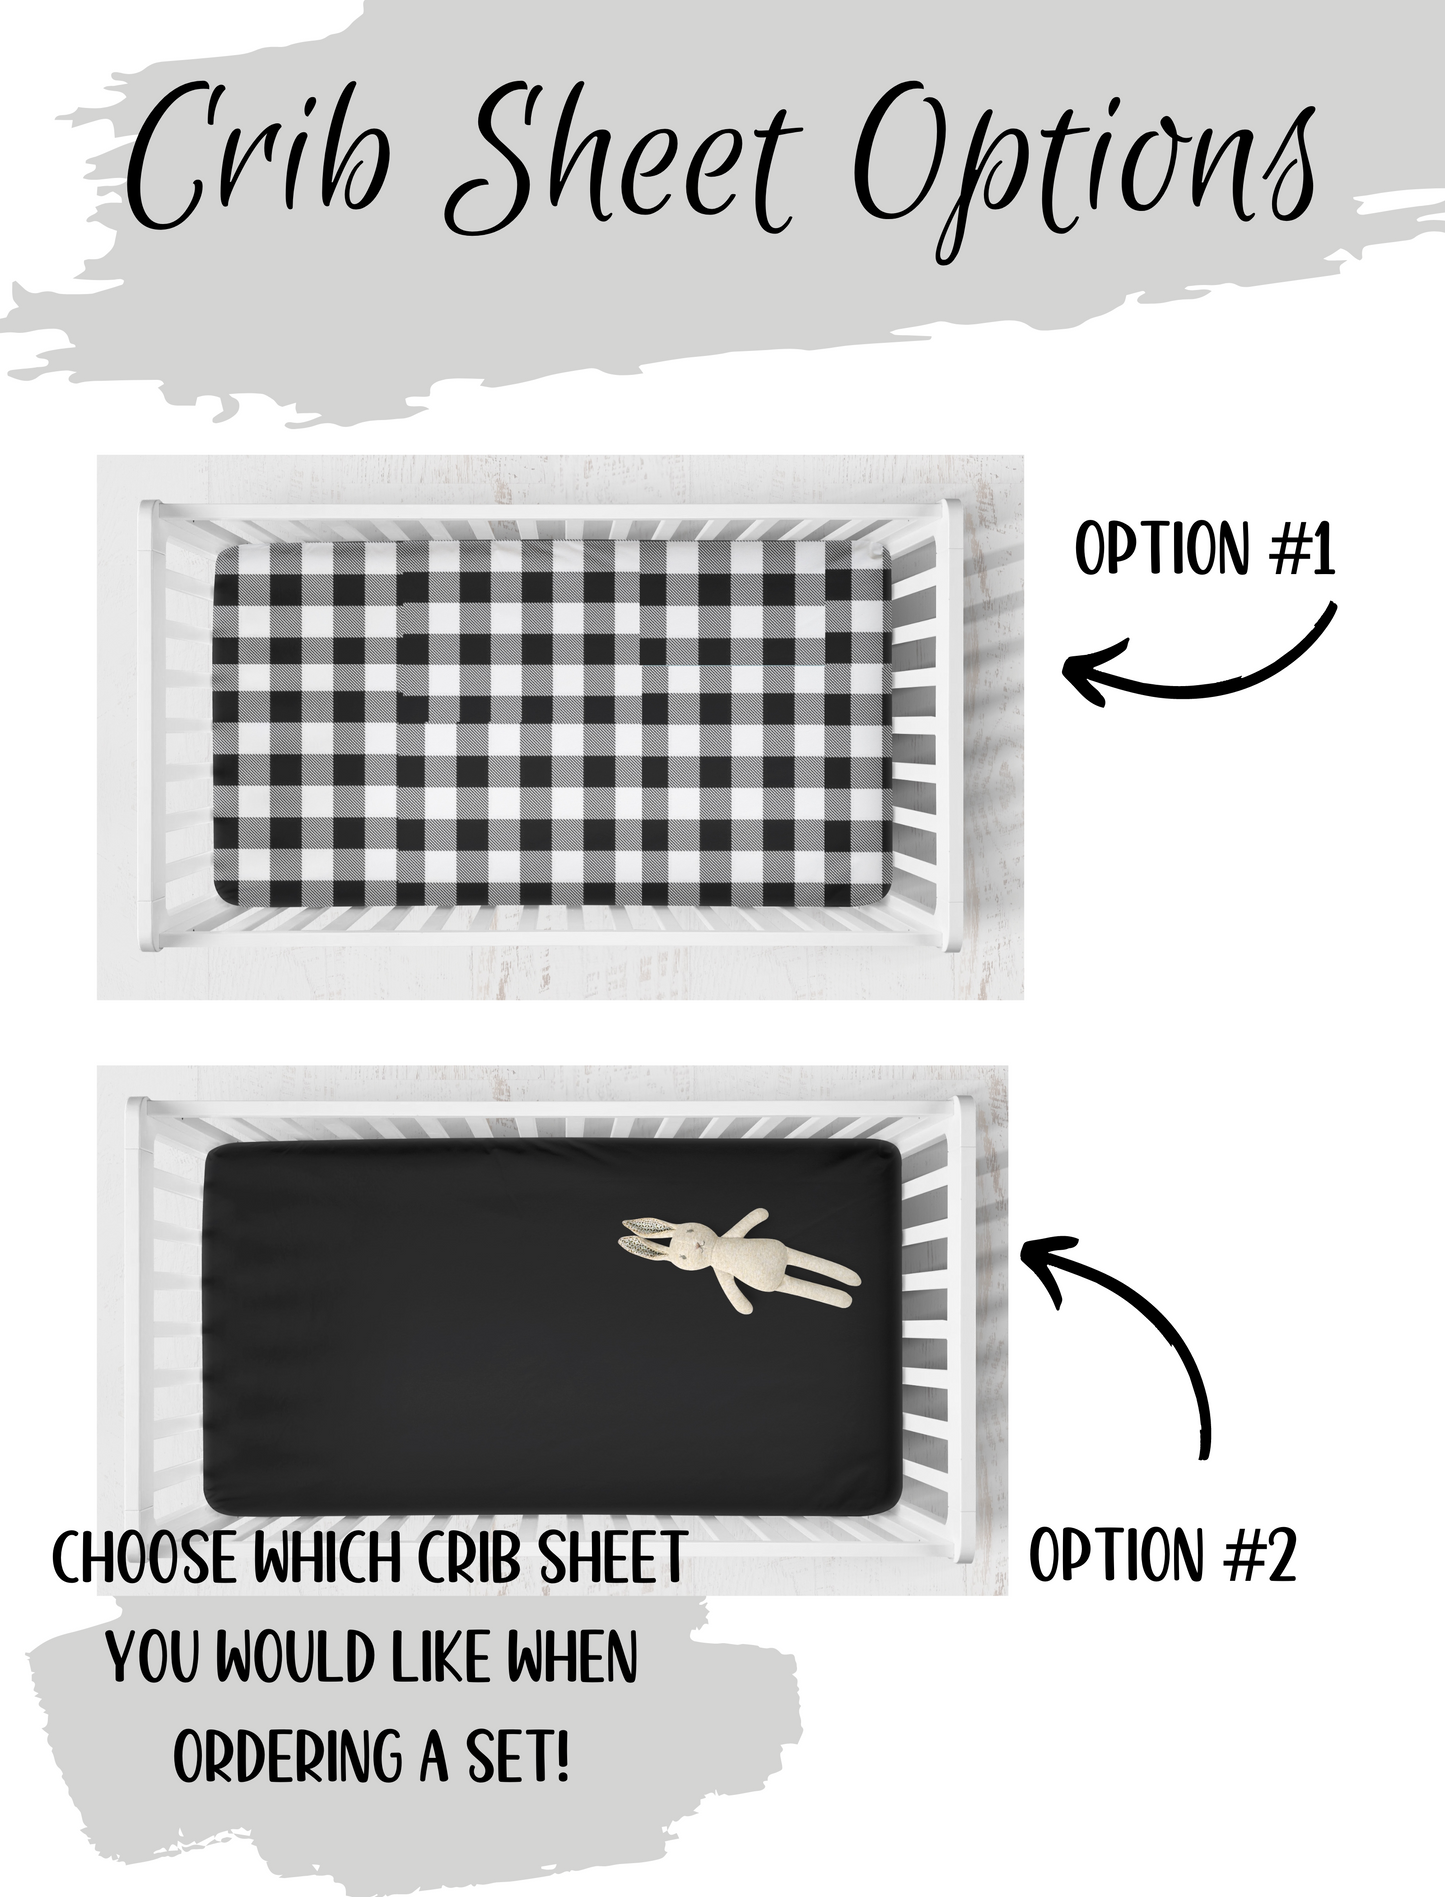 pick your crib sheet - black gingham or black crib sheet